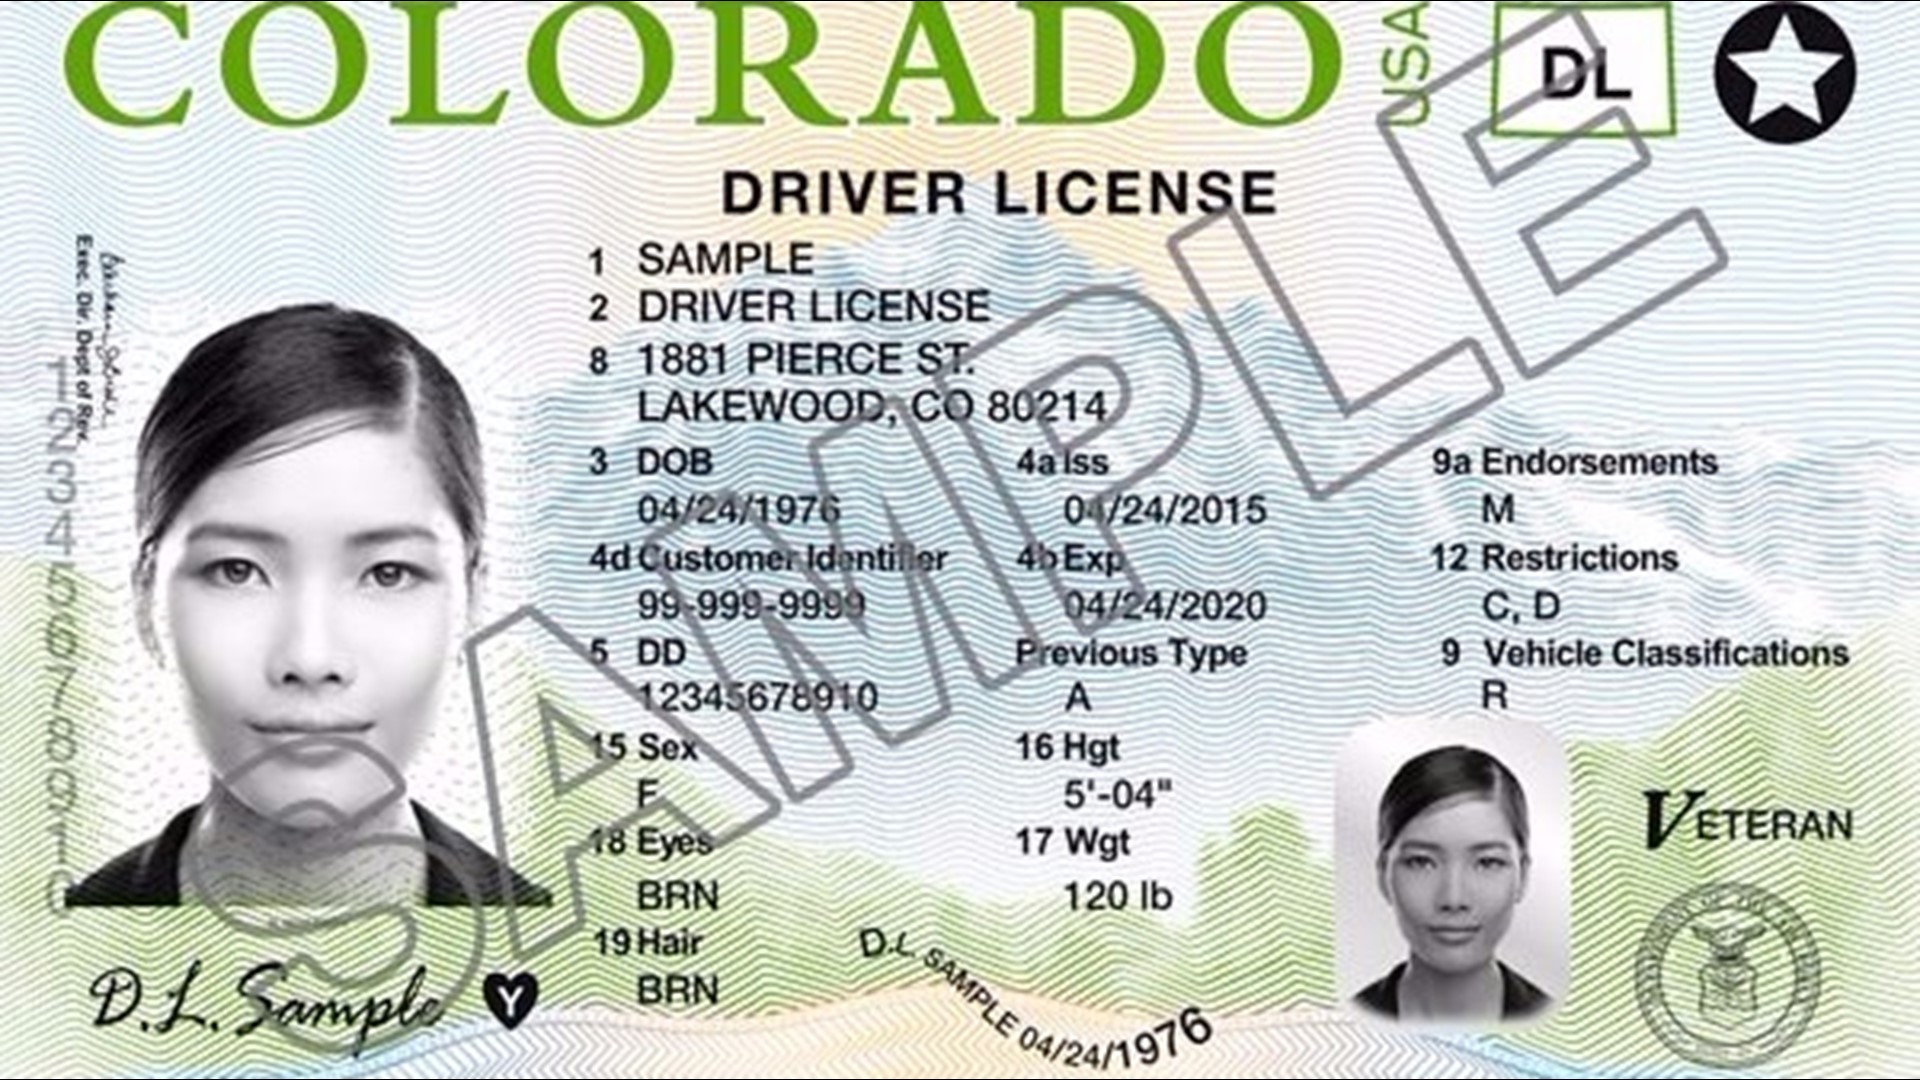 Colorado driver's licenses get new look